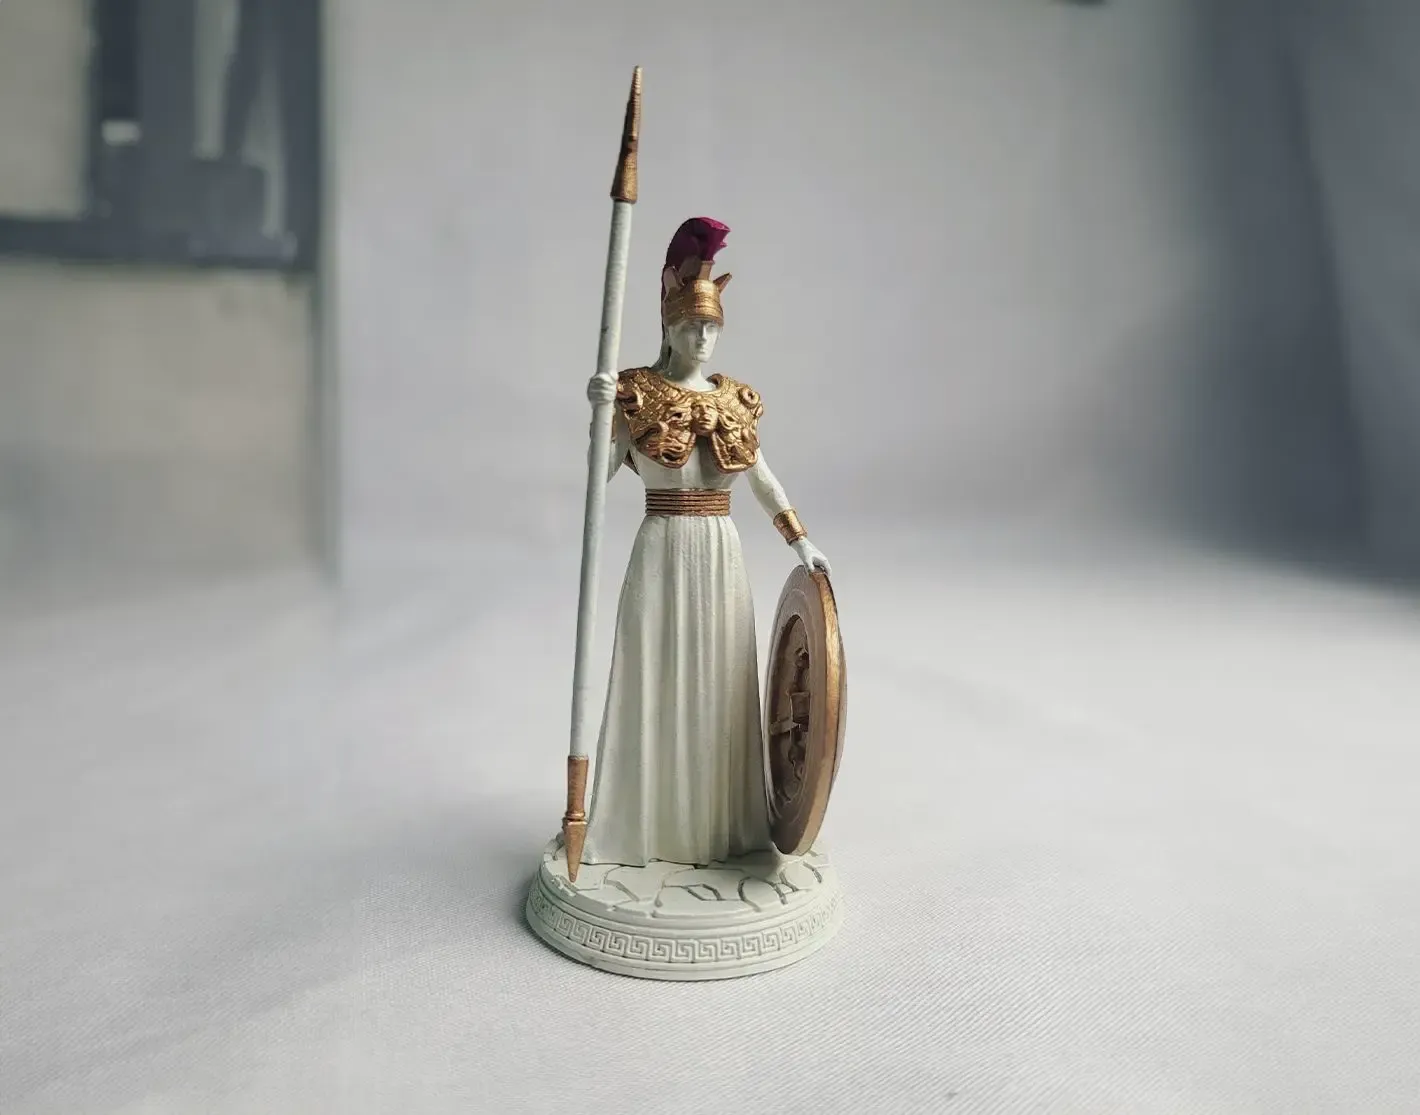 Athena the goddess of war